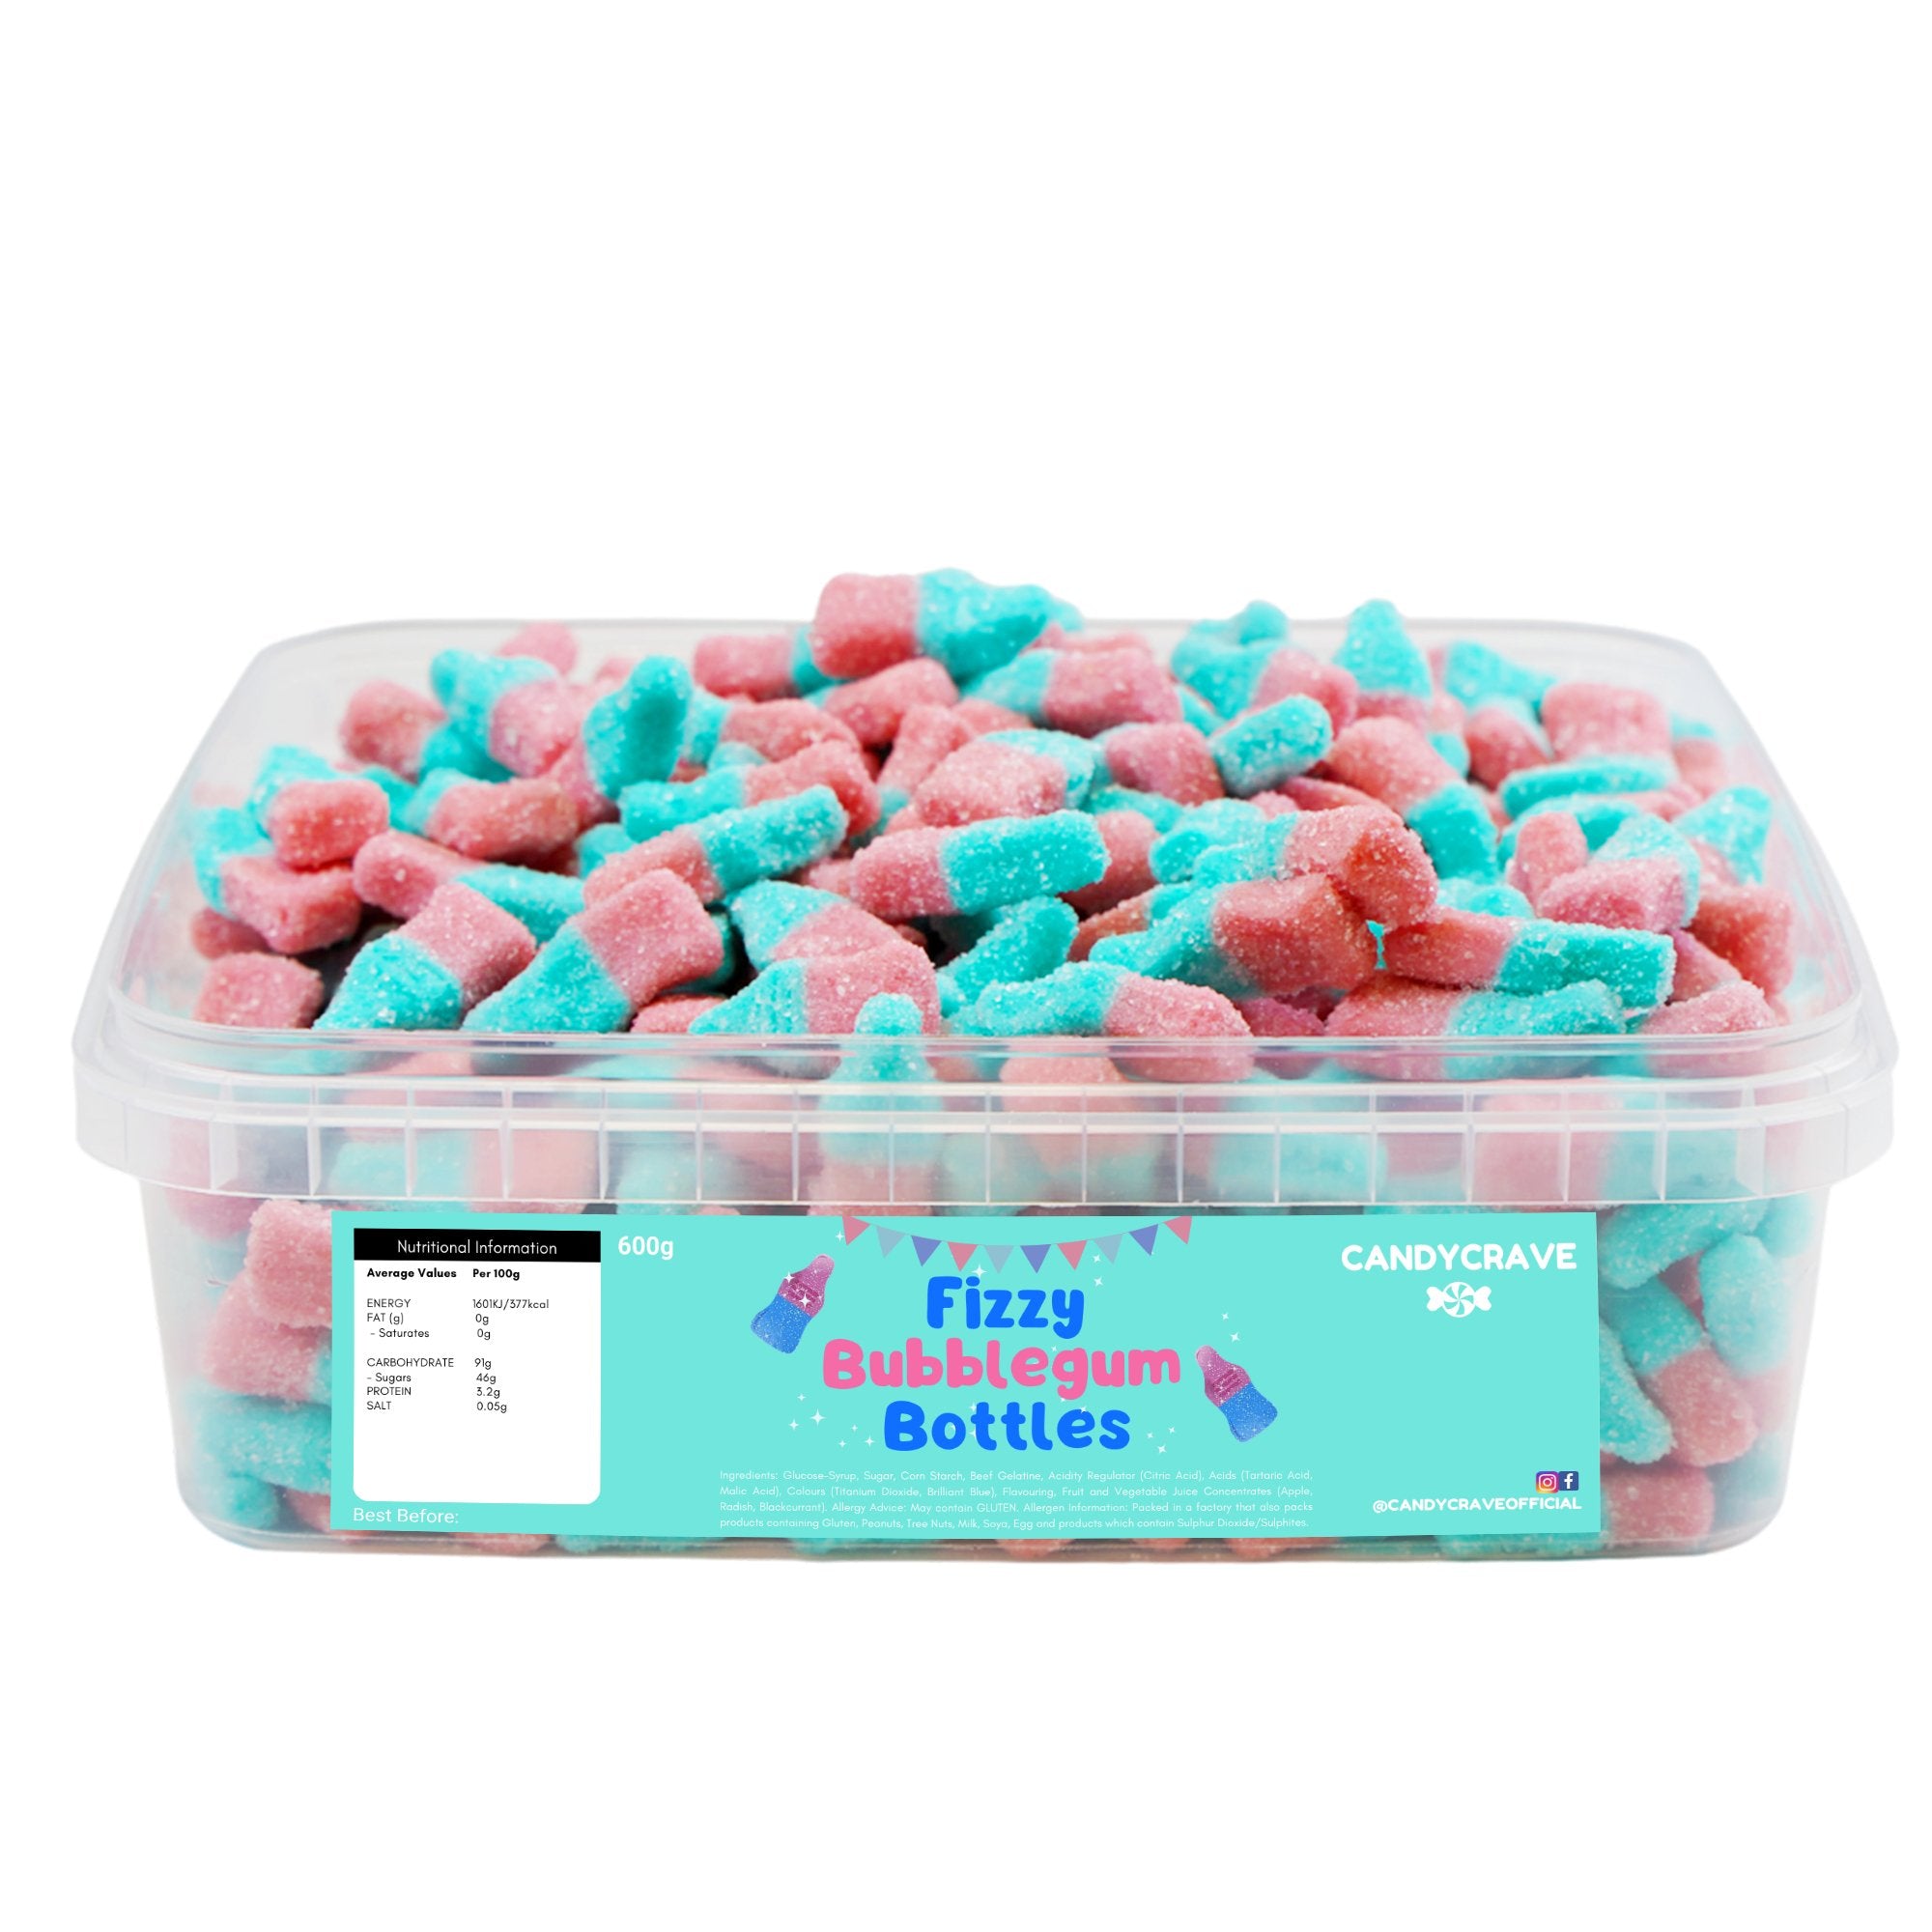 Candy Crave Bubblegum Bottles Tub 600g - Jessica's Sweets